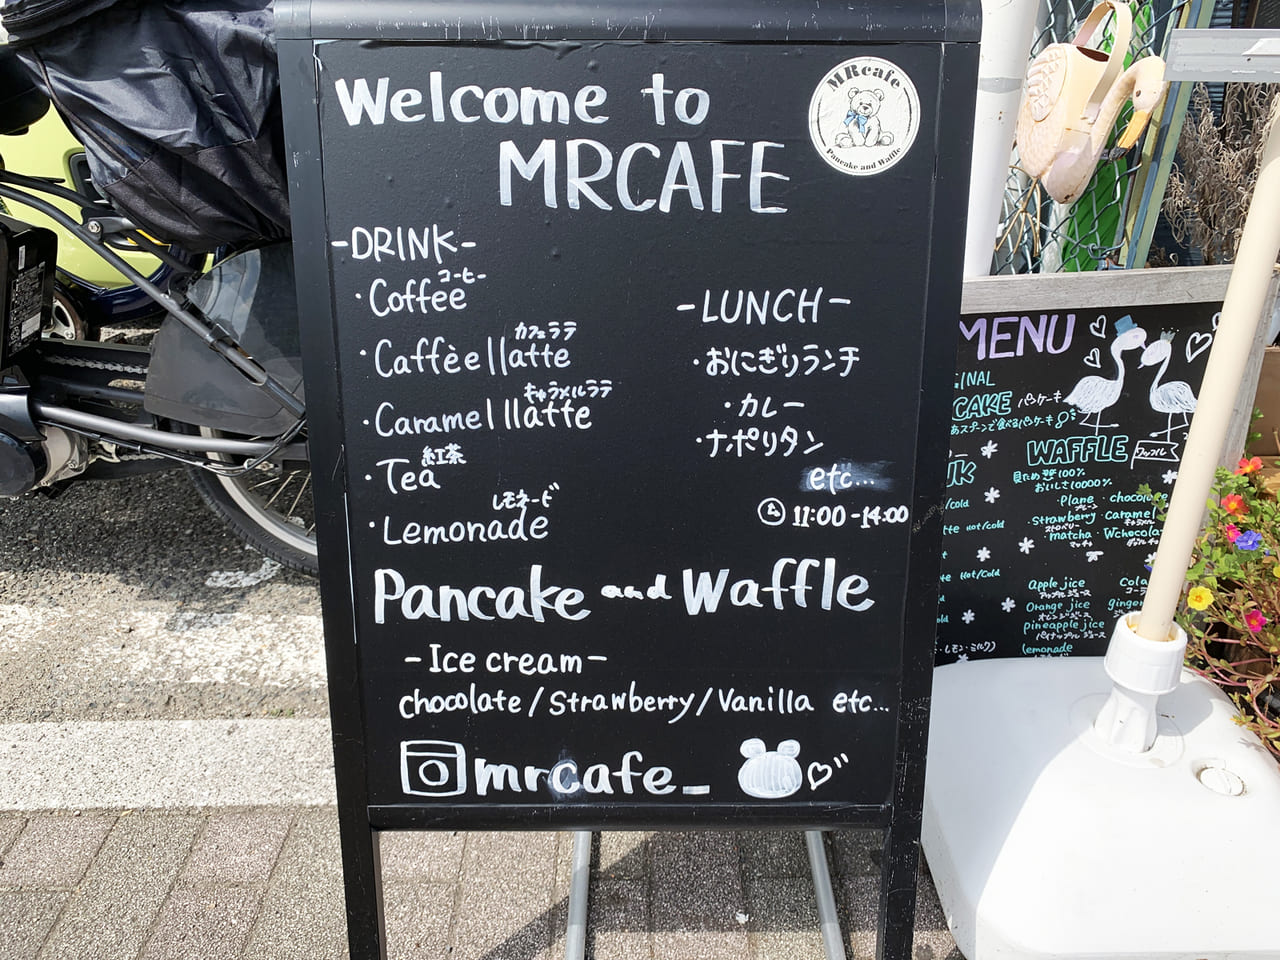 MRcafe